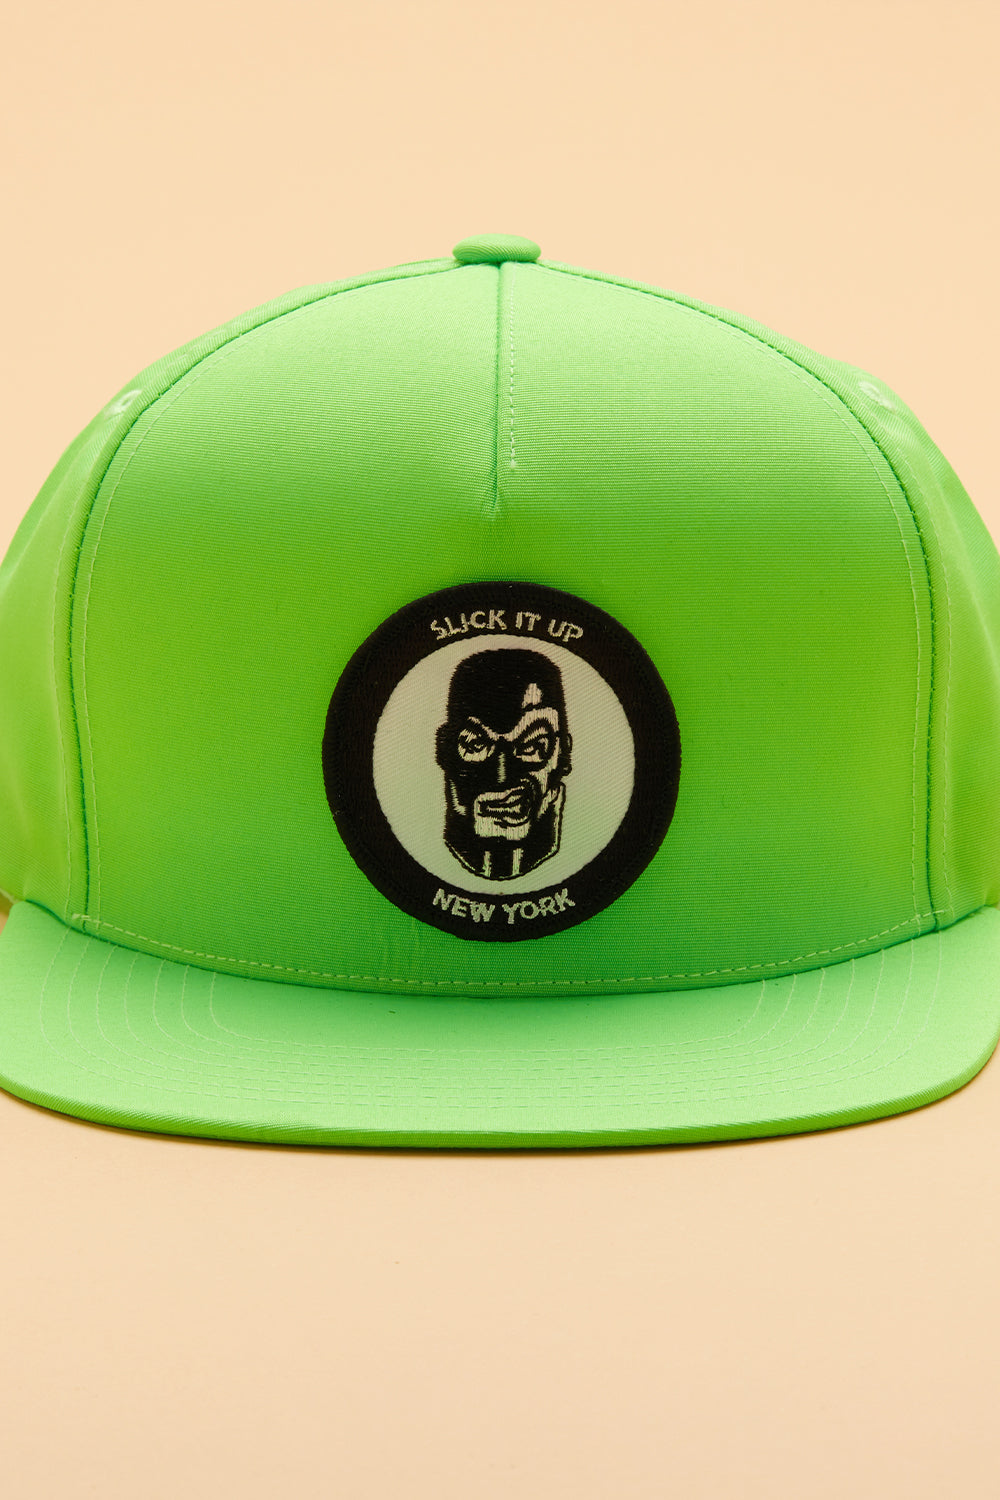 Neon Green Logo Hat - Slick It Up 